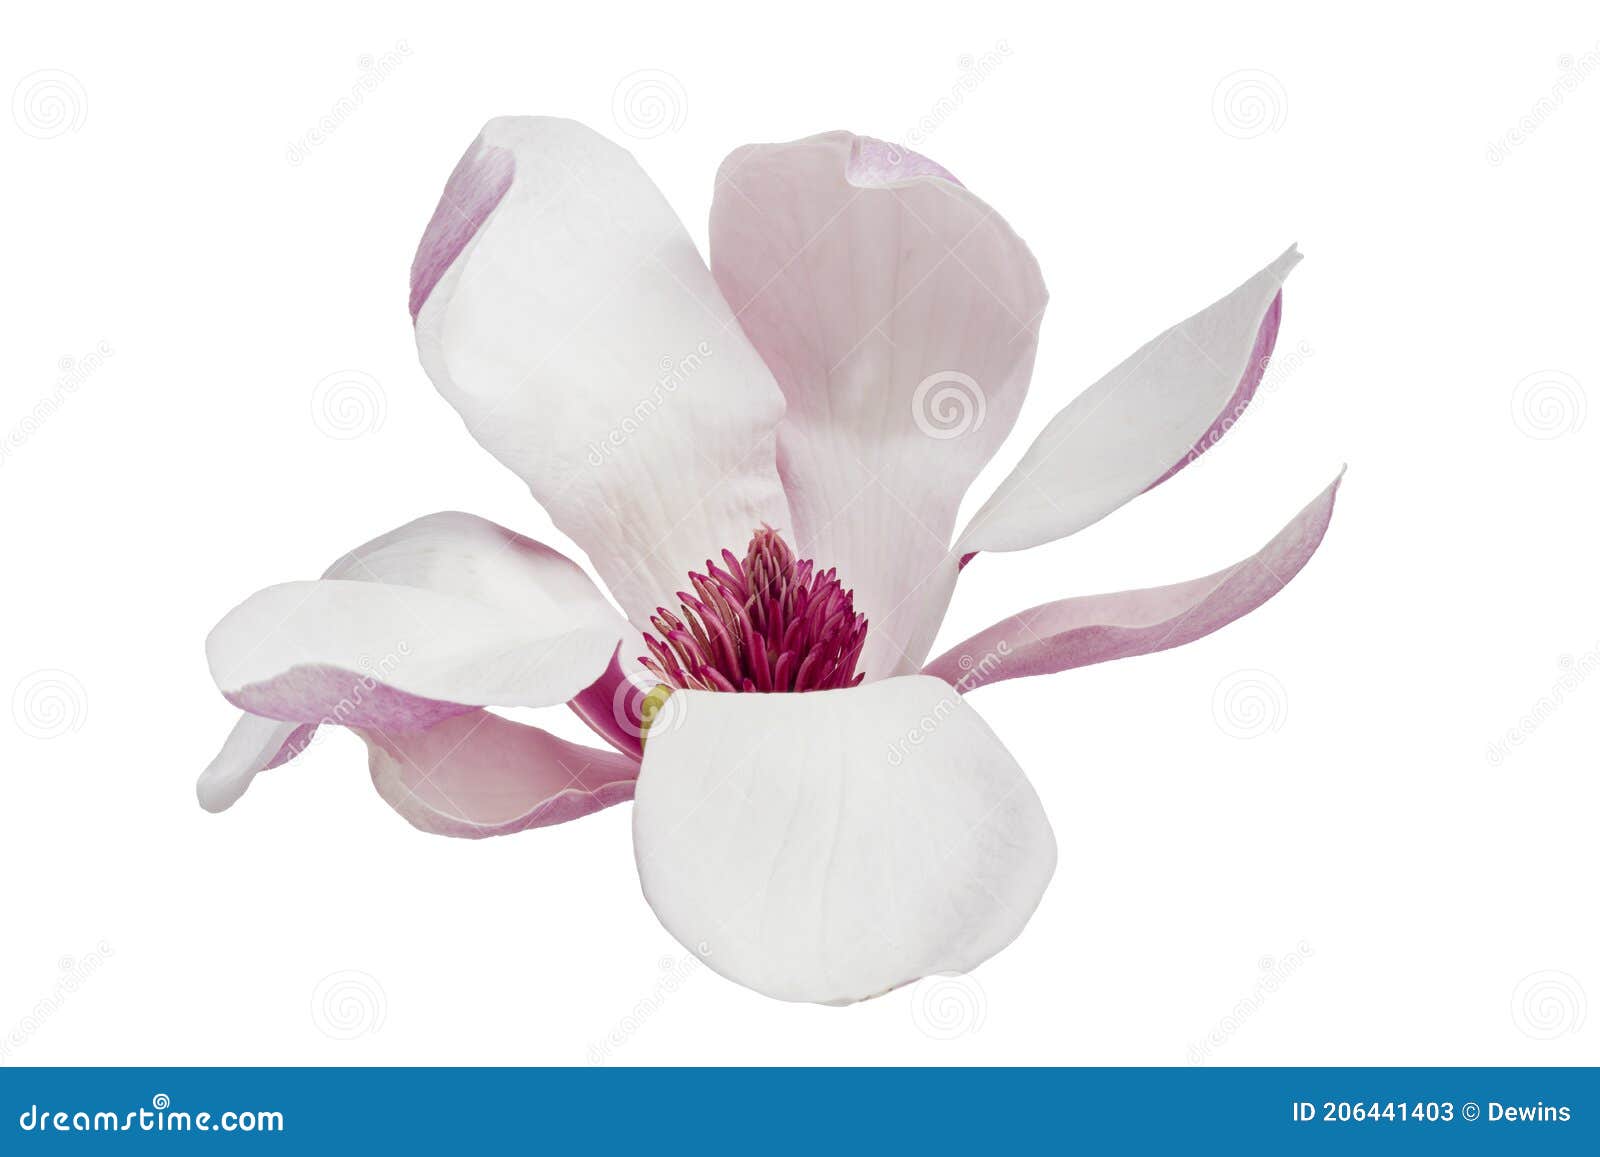 magnolia liliiflora flower on branch with leaves, lily magnolia flower  on white background with clipping path